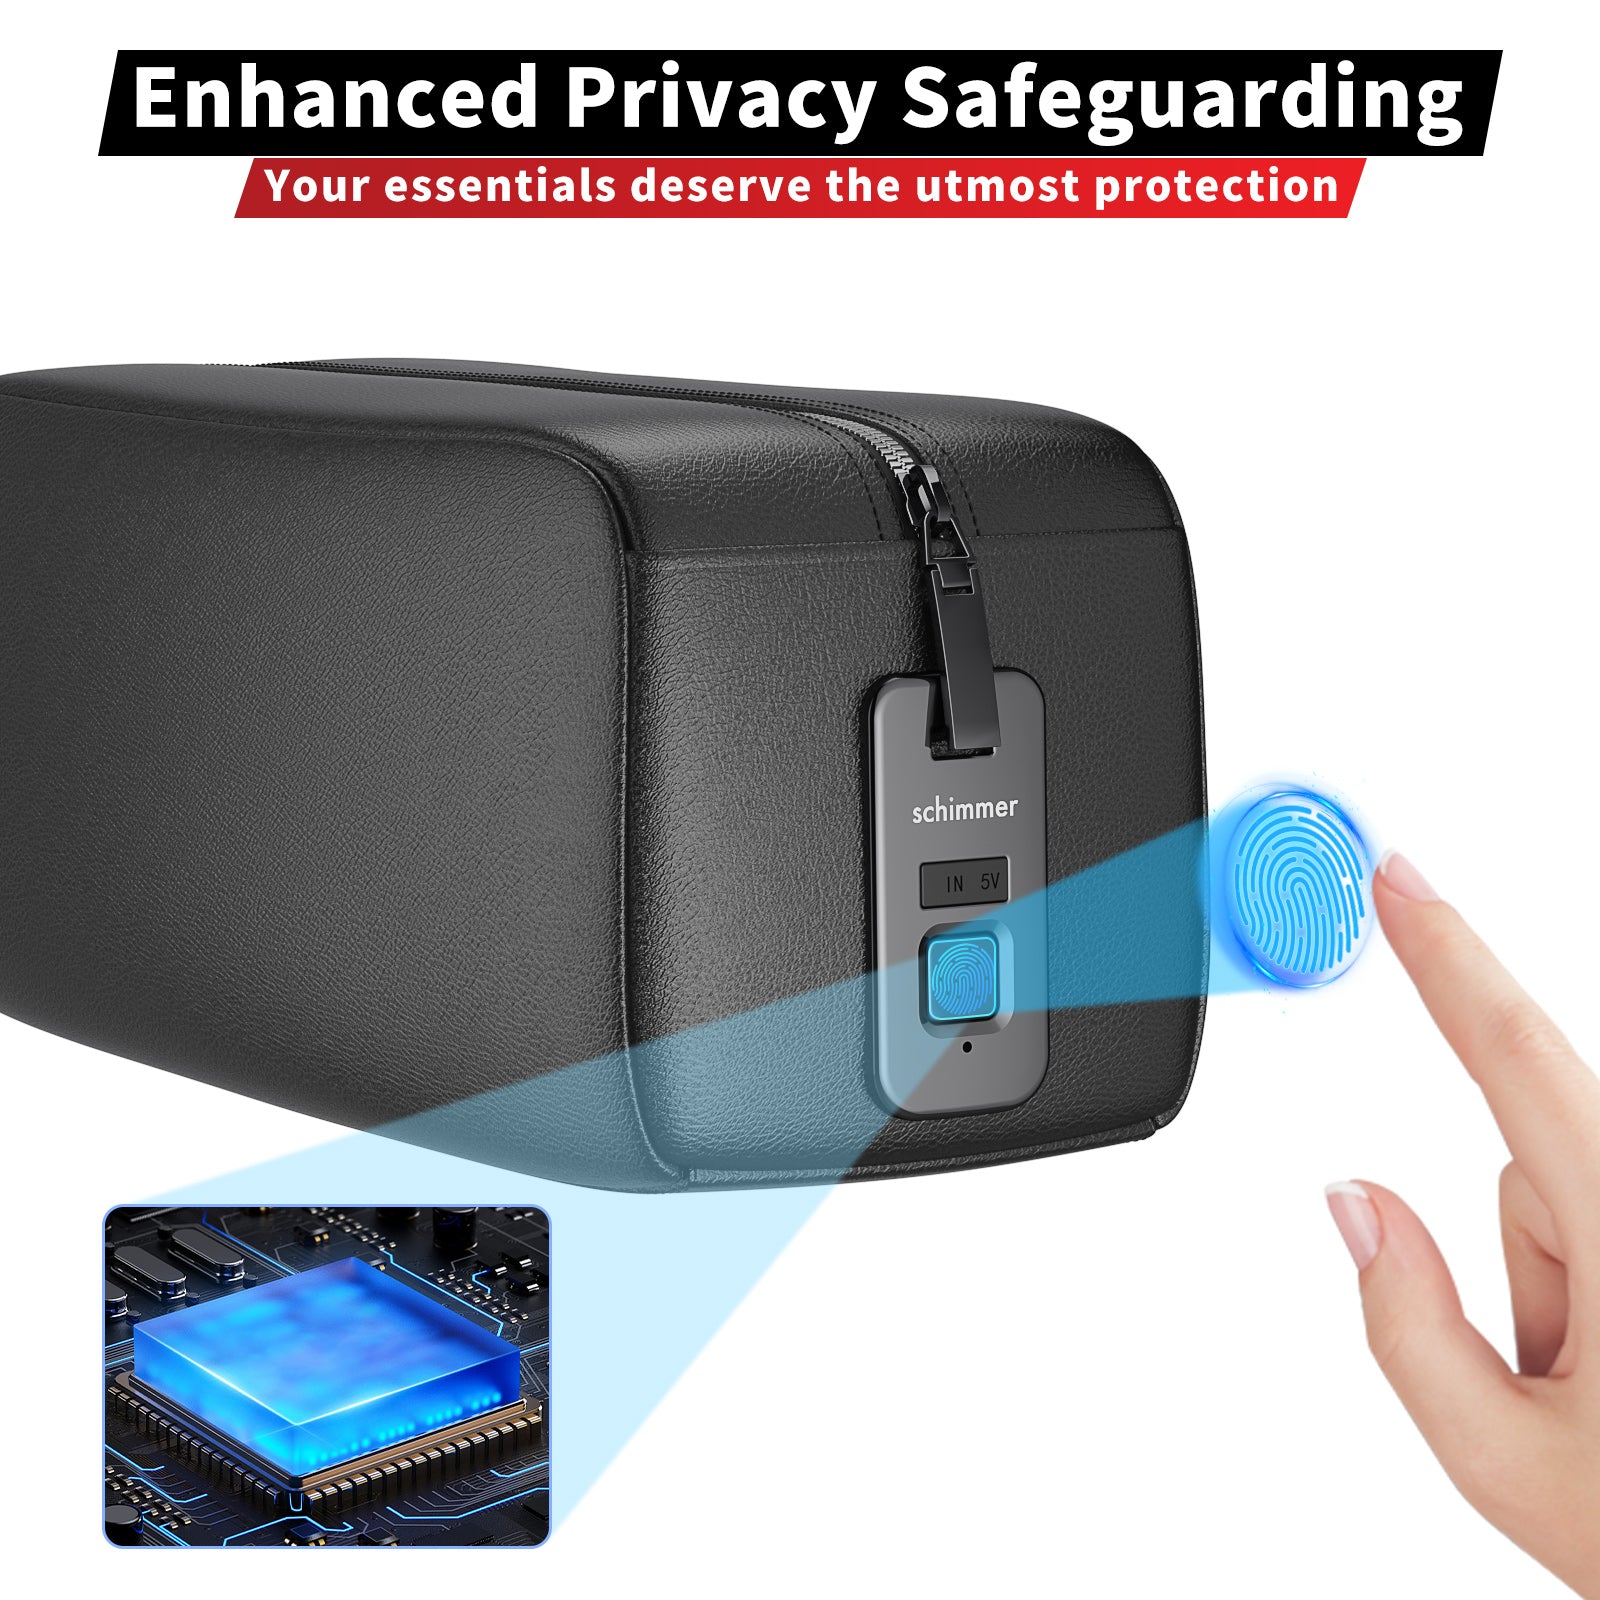 Enhanced privacy safeguarding with Schimmer A7 Dopp Kit Clutch Handbag with Biometric Fingerprint Lock